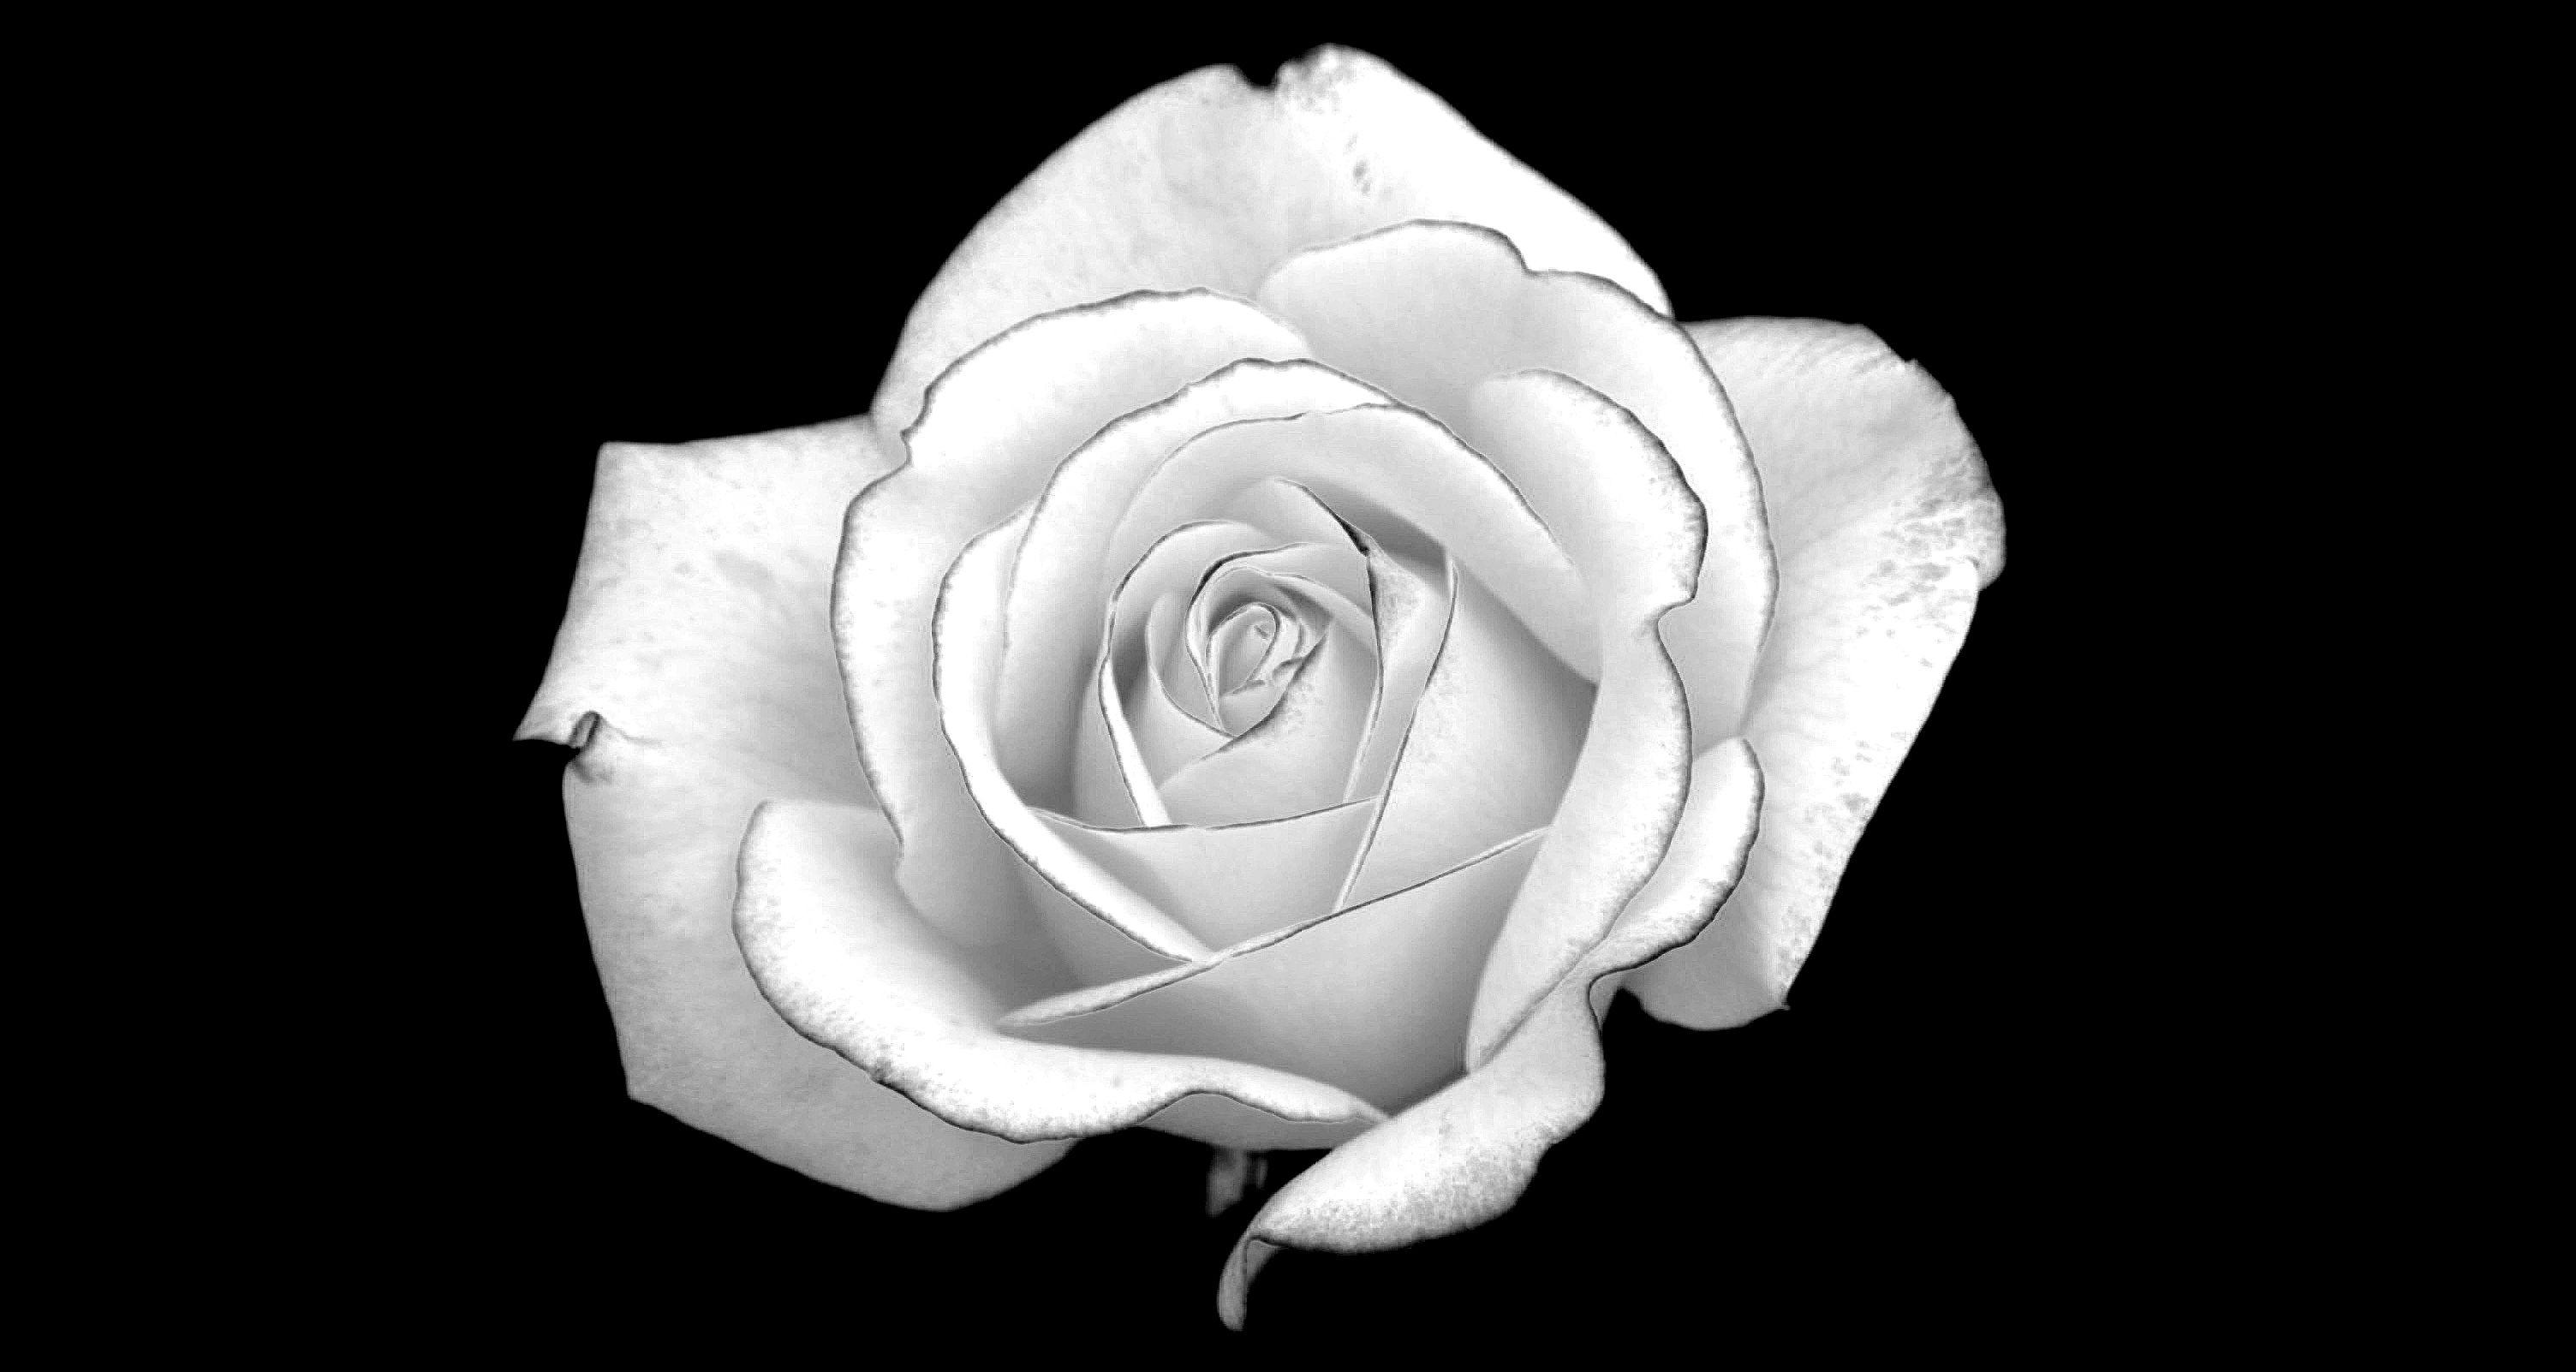 dongetrabi: Black And White Rose Painting Image